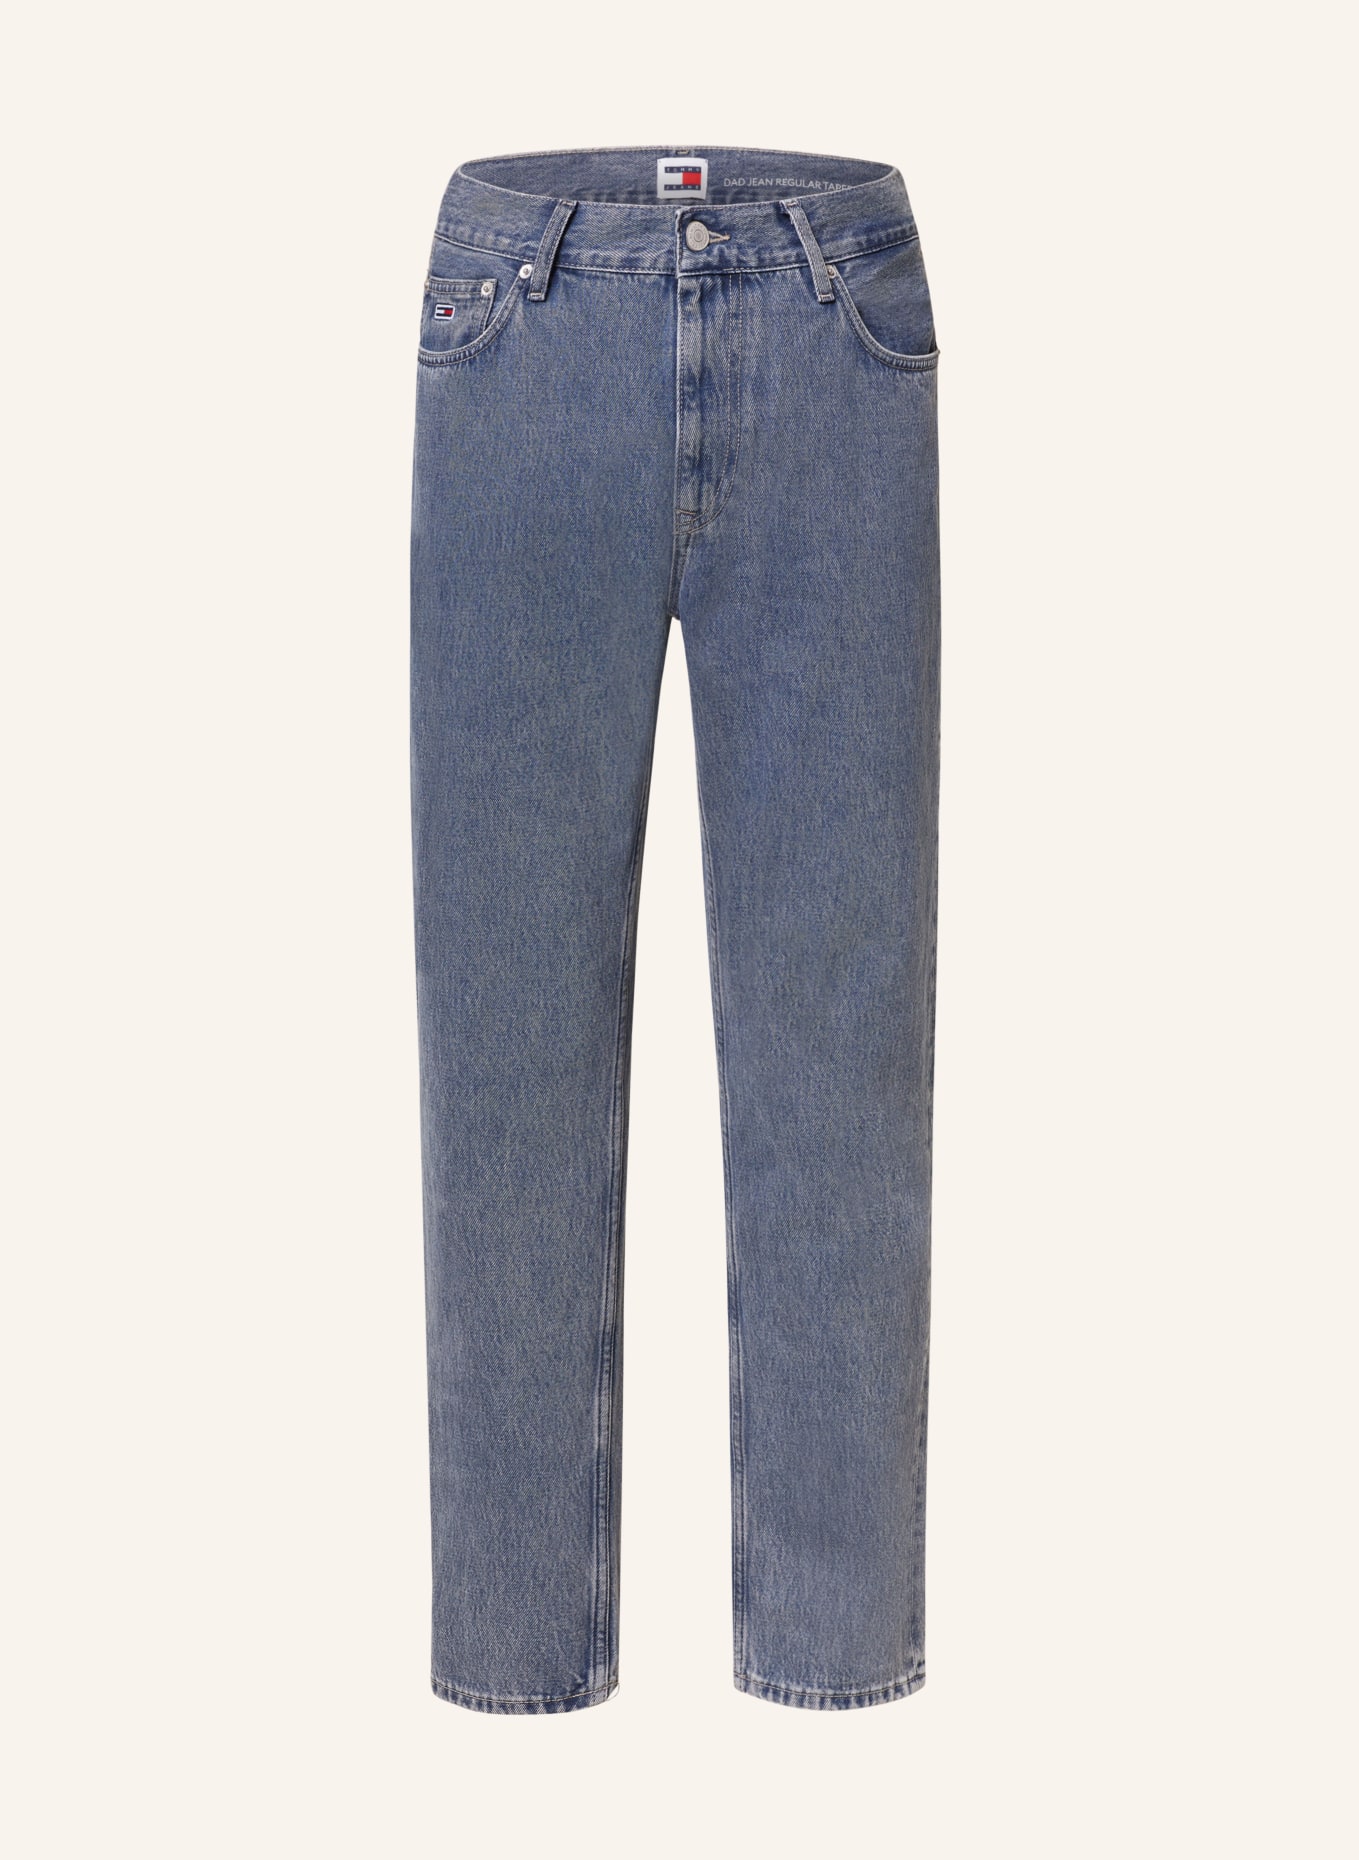 TOMMY JEANS Jeans Tapered Fit, Farbe: 1BK Denim Dark (Bild 1)